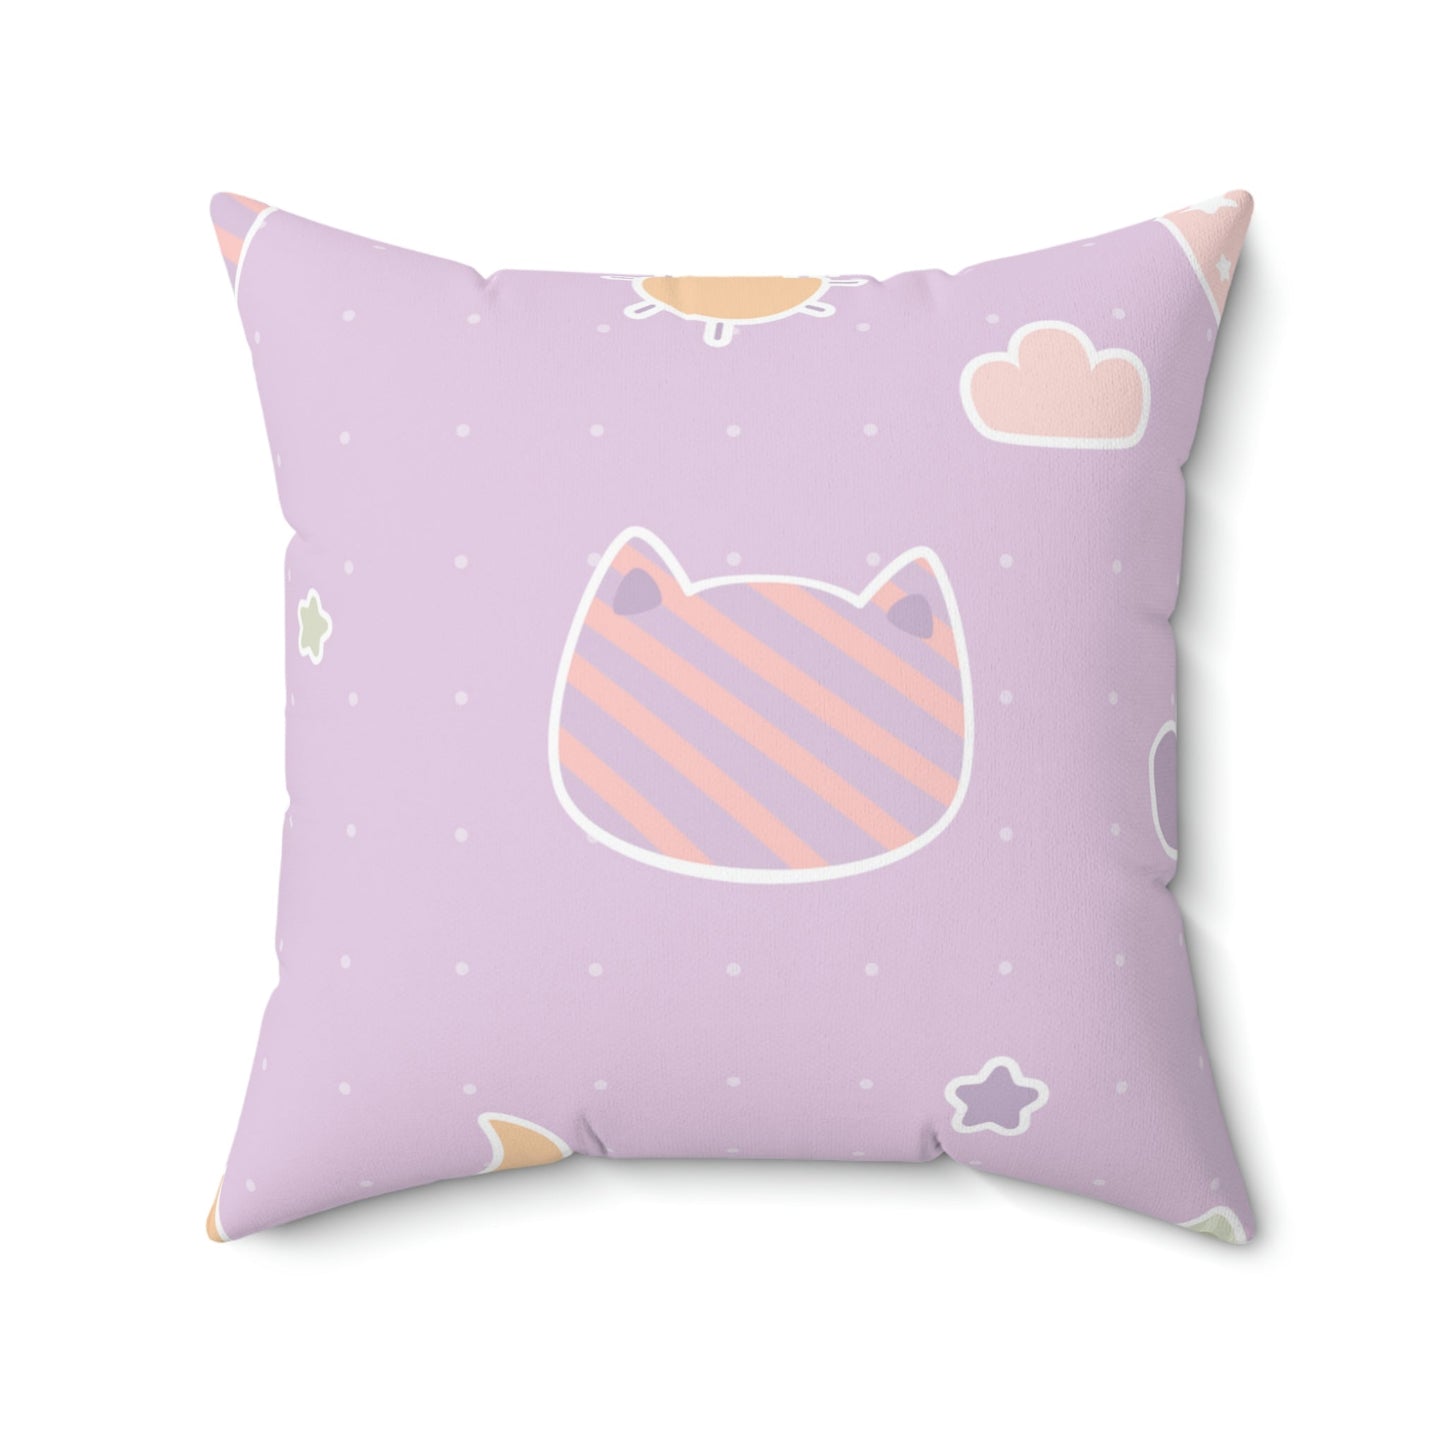 Kawaii Kitty Square Pillow Home Decor Pink Sweetheart